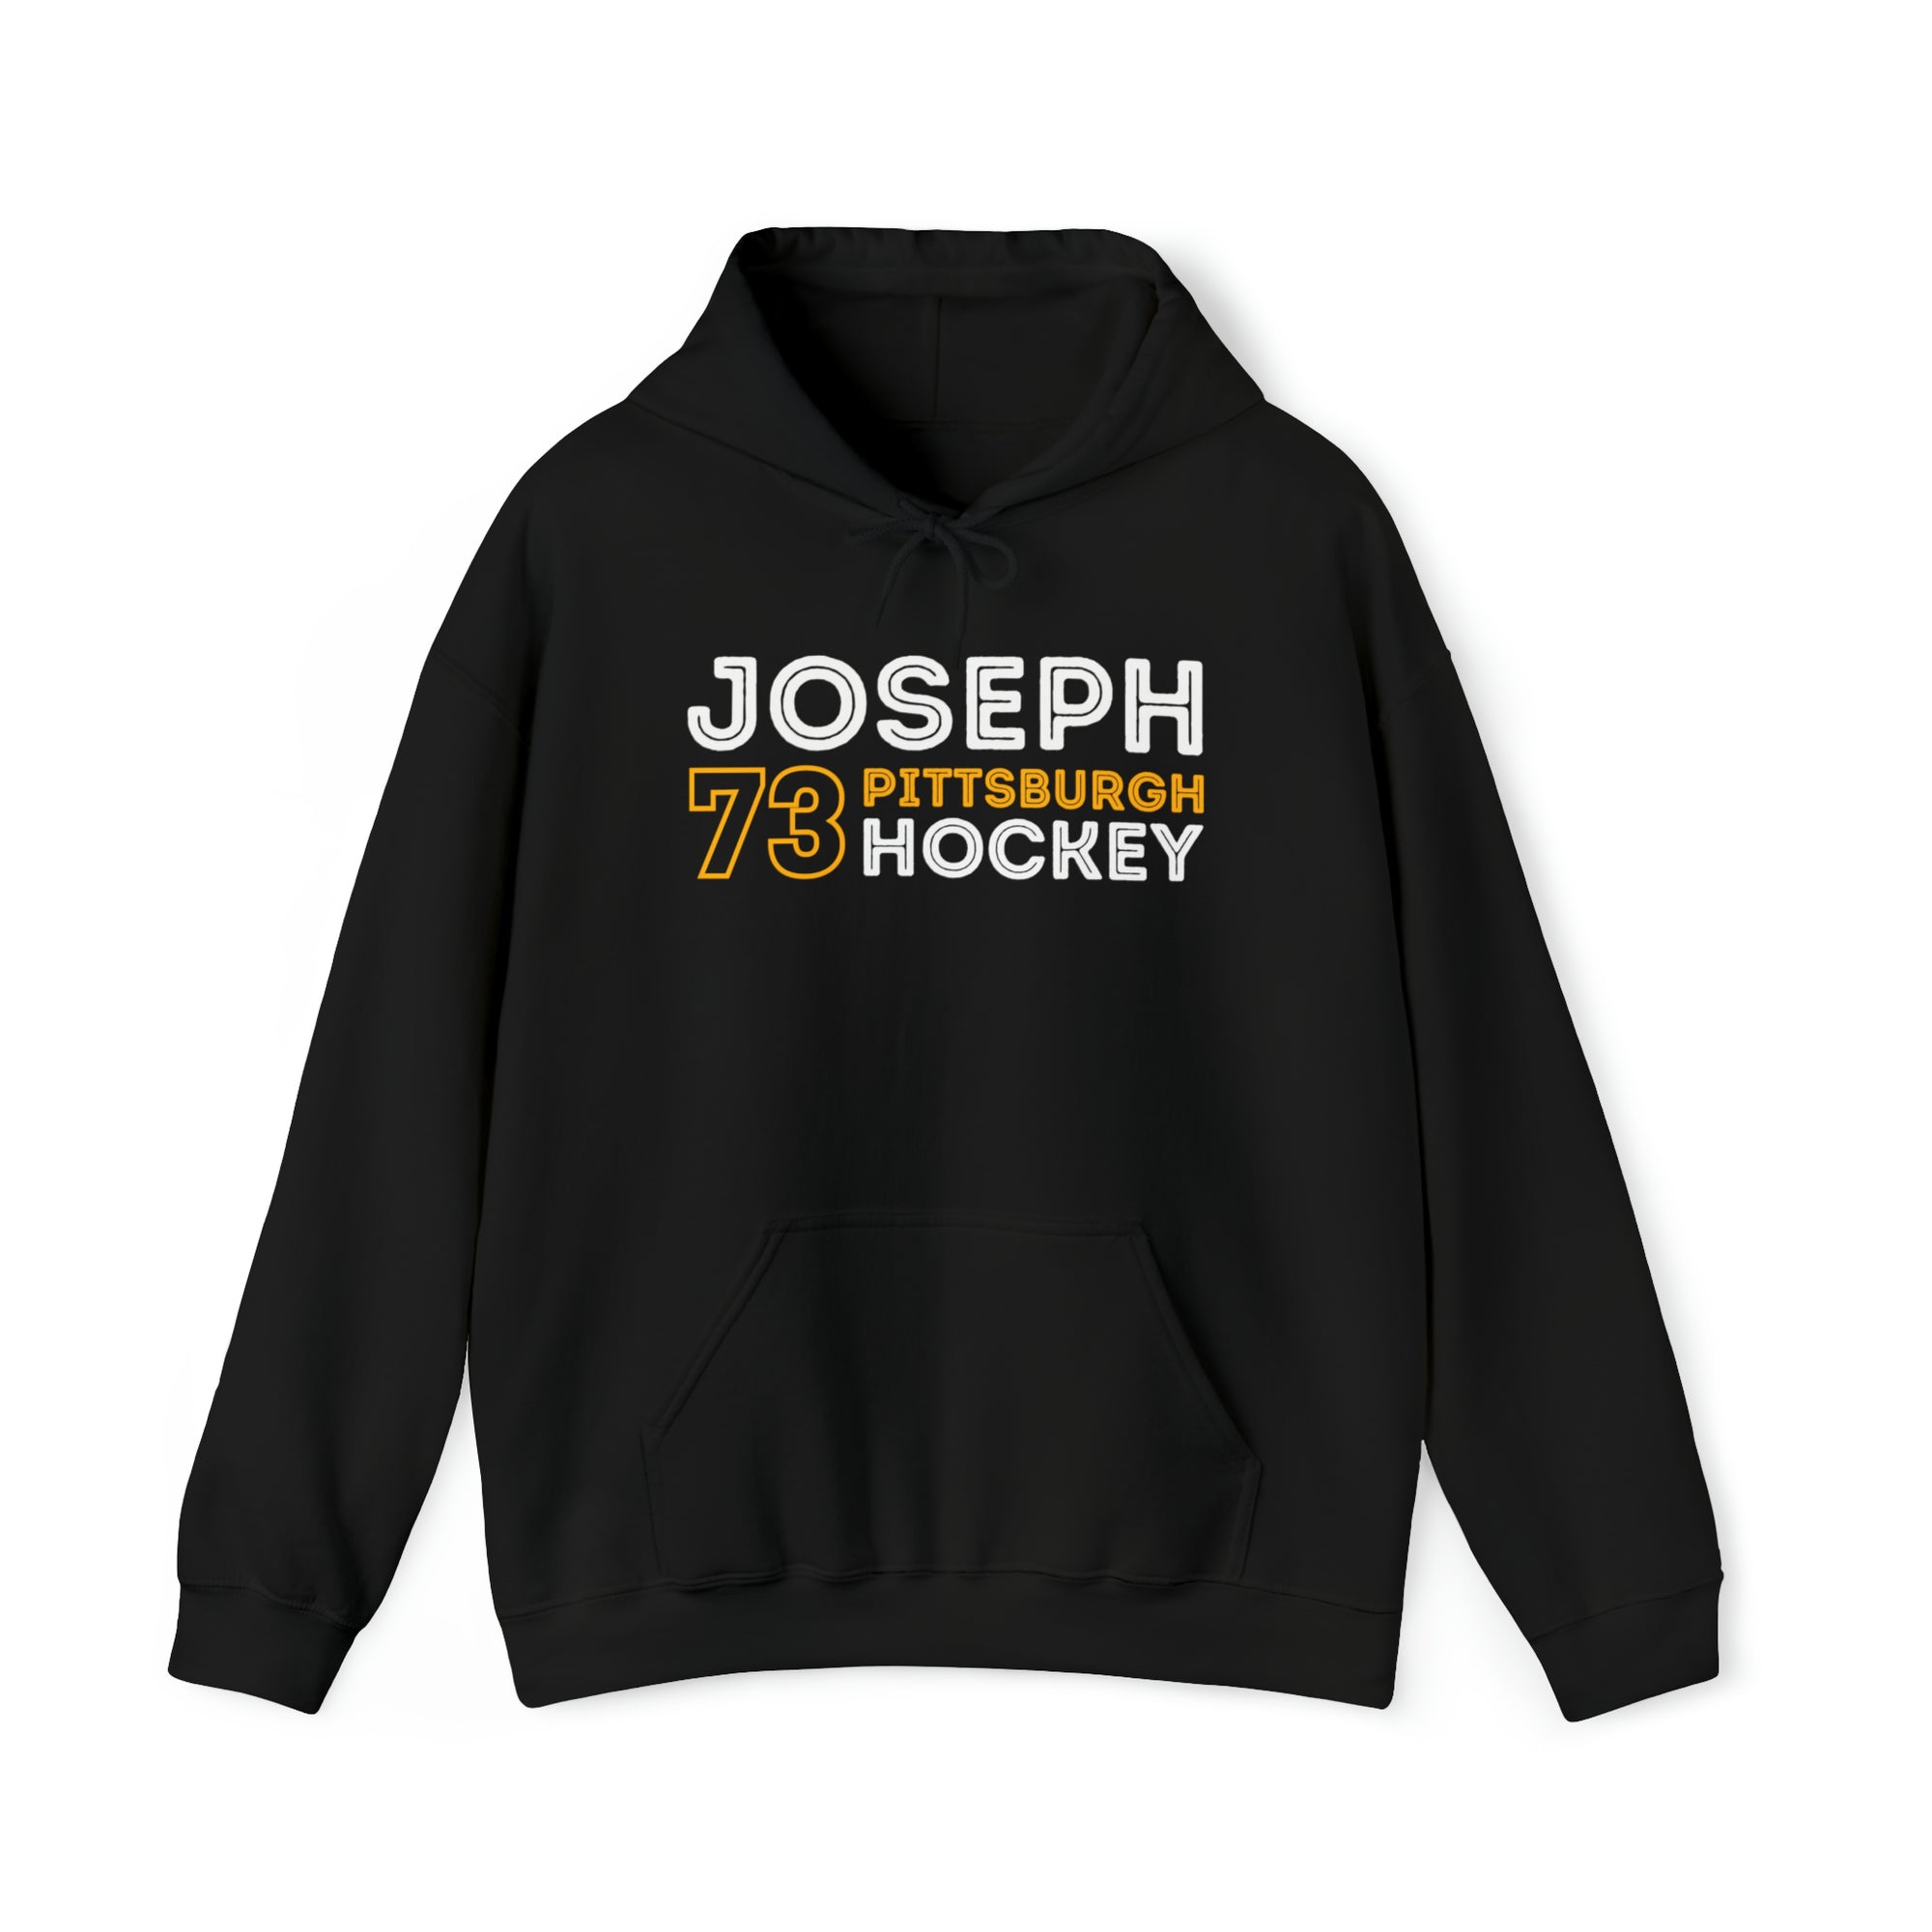 Joseph 73 Pittsburgh Hockey Grafitti Wall Design Unisex Hooded Sweatshirt